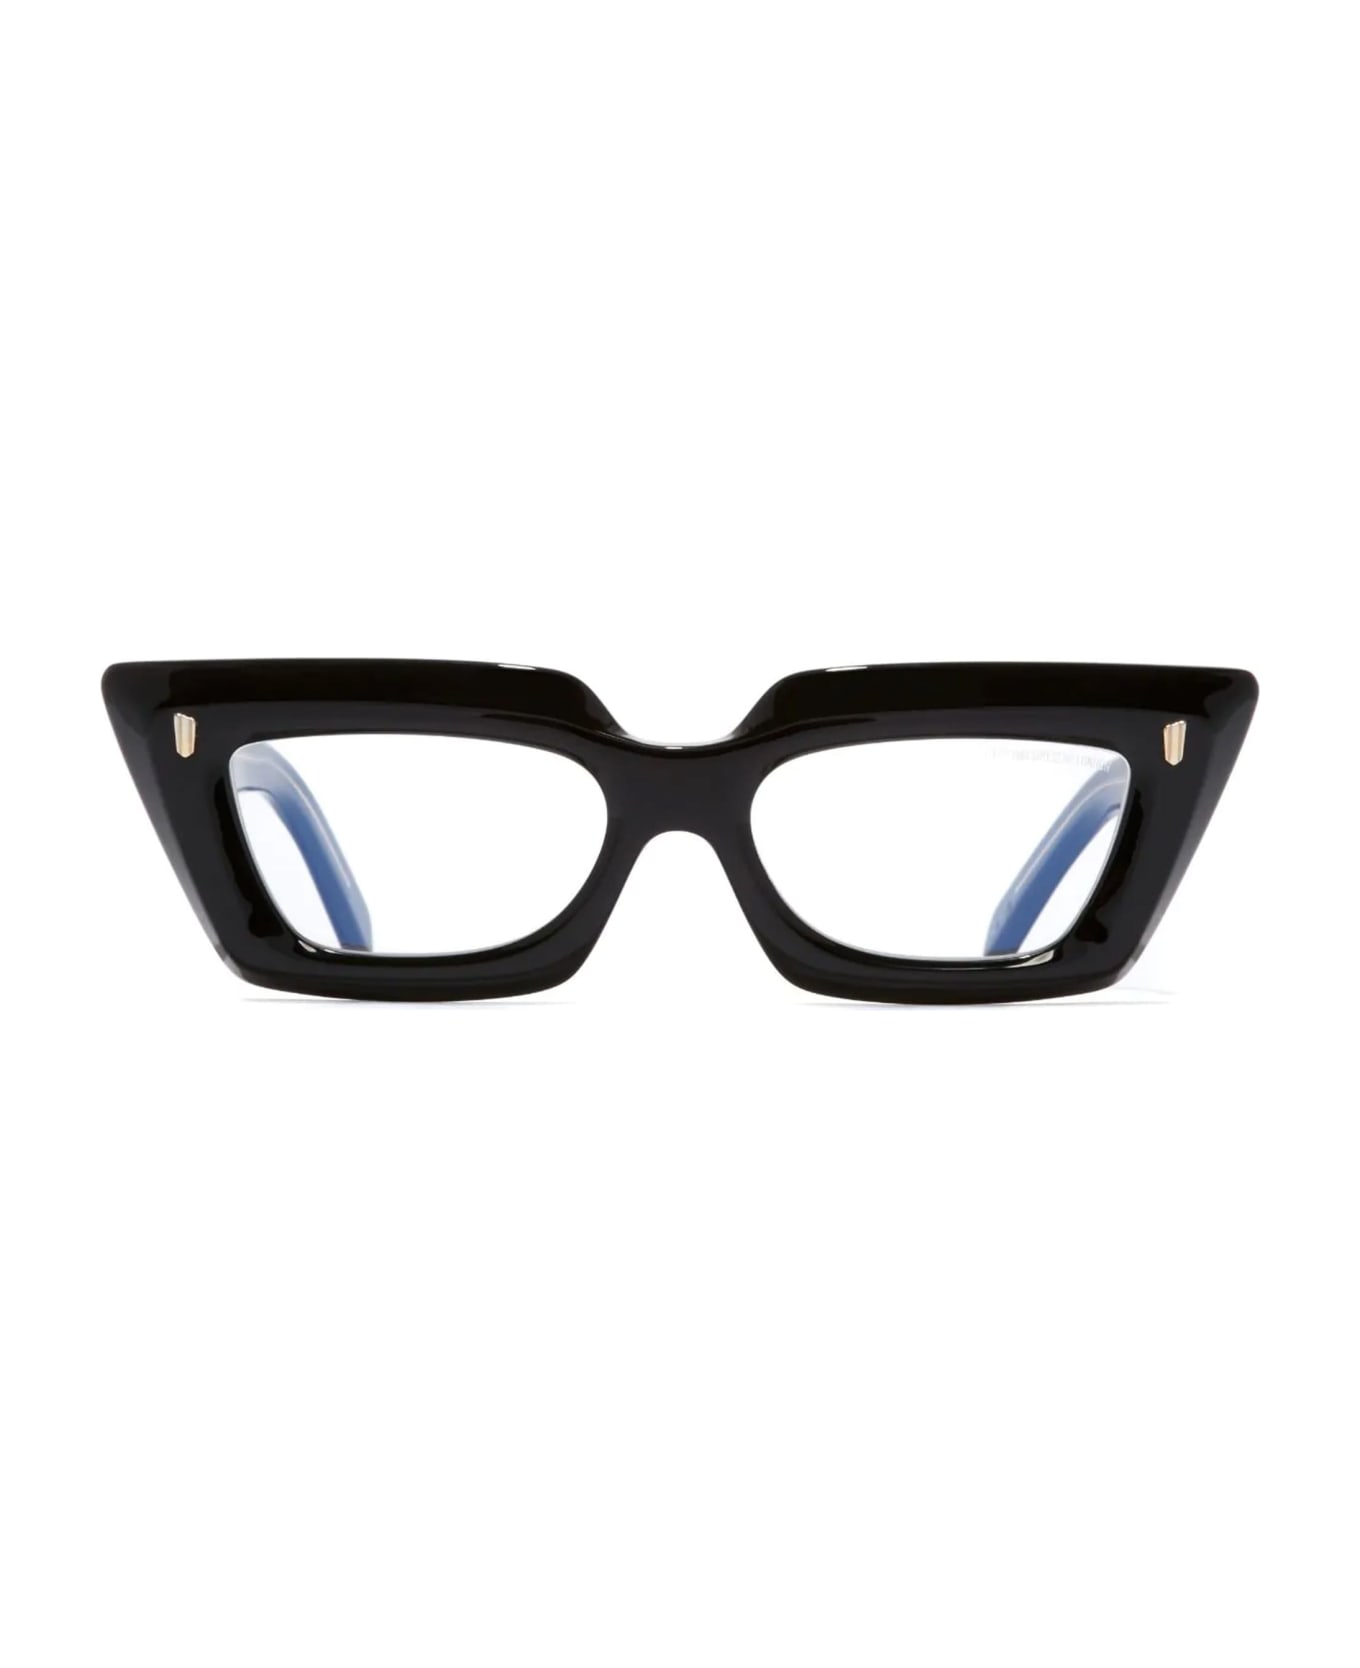 Cutler and Gross 1408 / Black Rx Glasses - Black